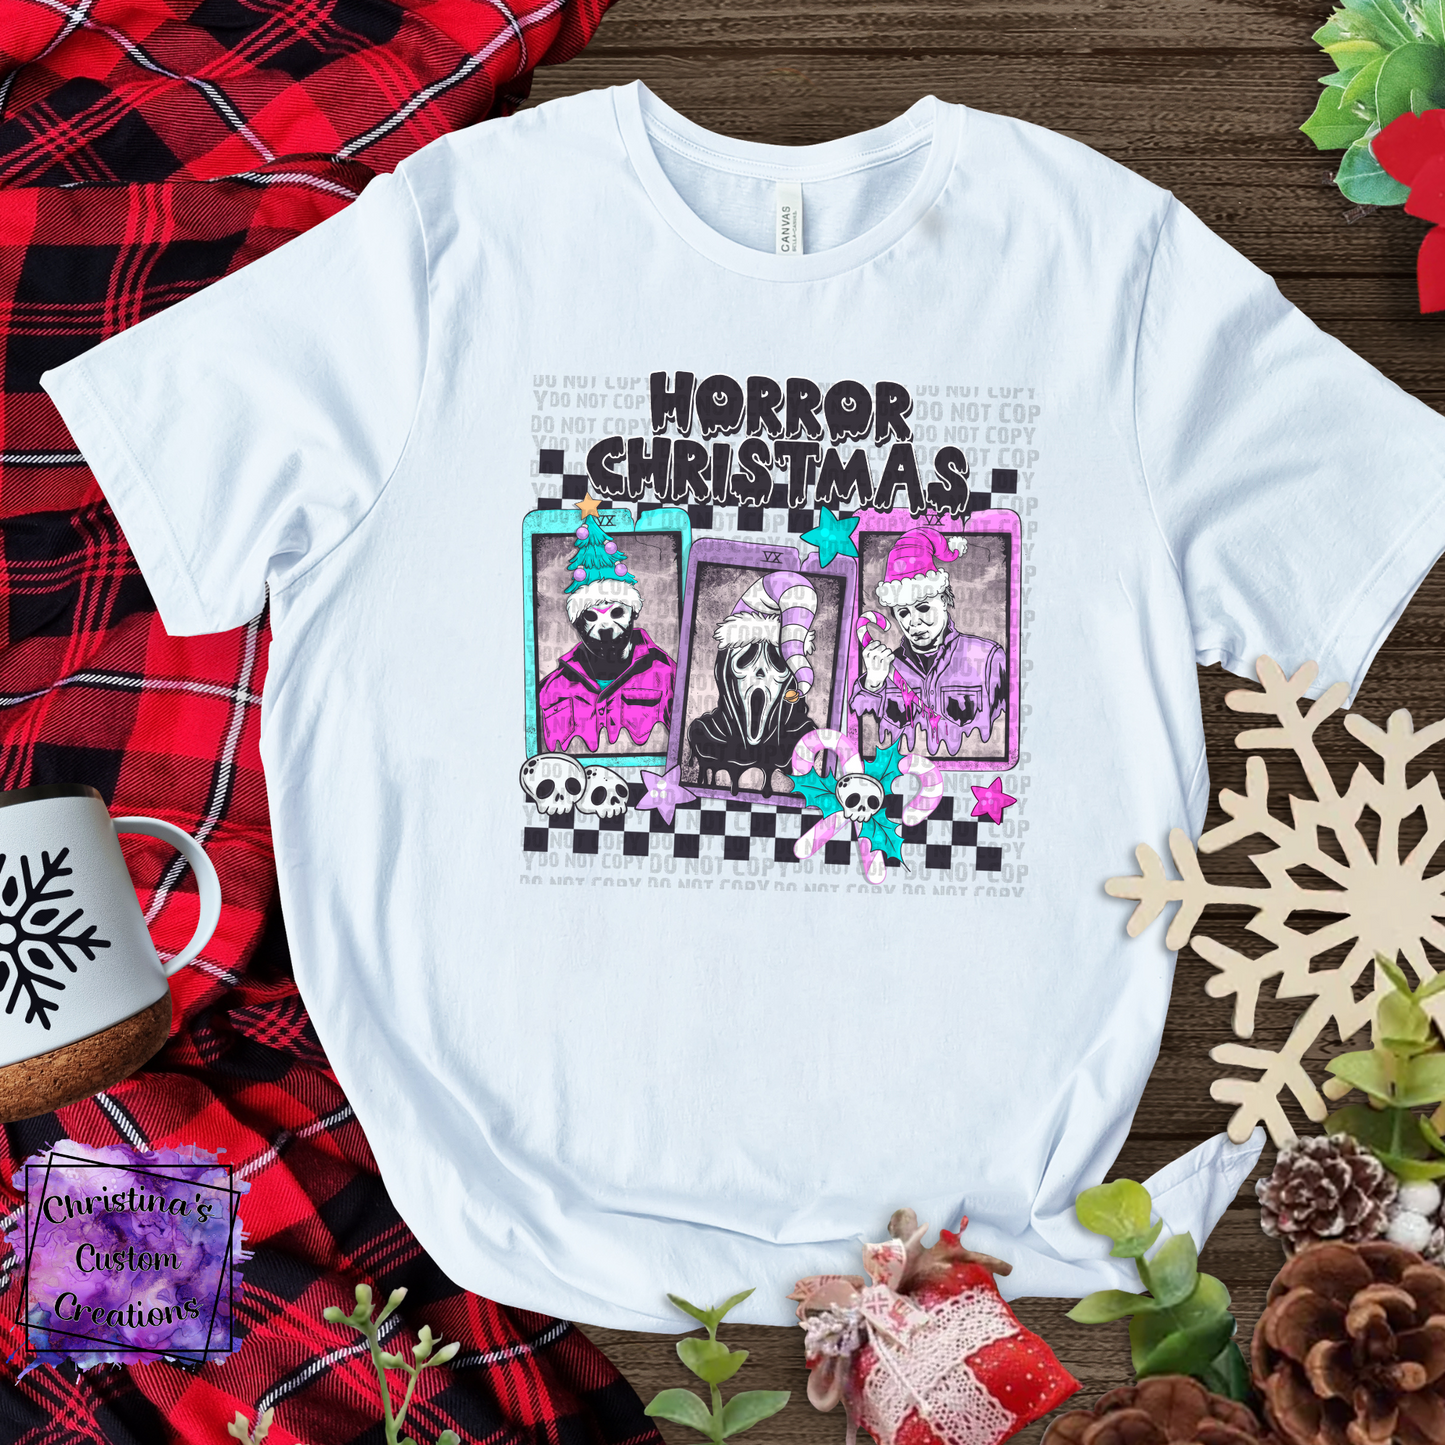 Horror Christmas T-Shirt | Funny Christmas Movie Shirt | Fast Shipping | Super Soft Shirts for Women/Kid's